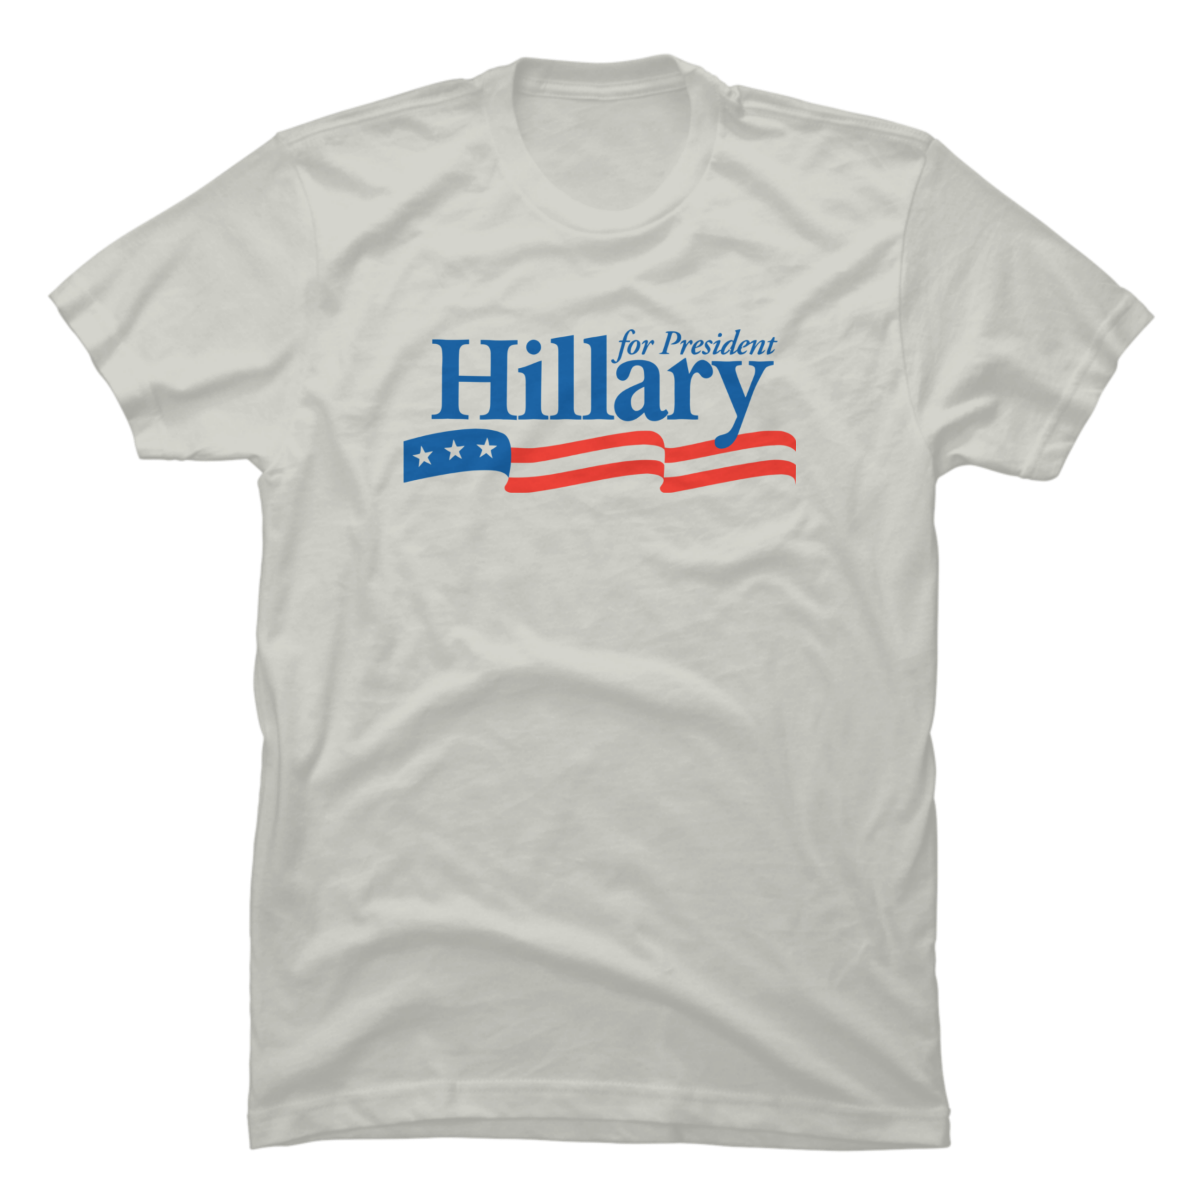 hillary clinton 2016 shirt